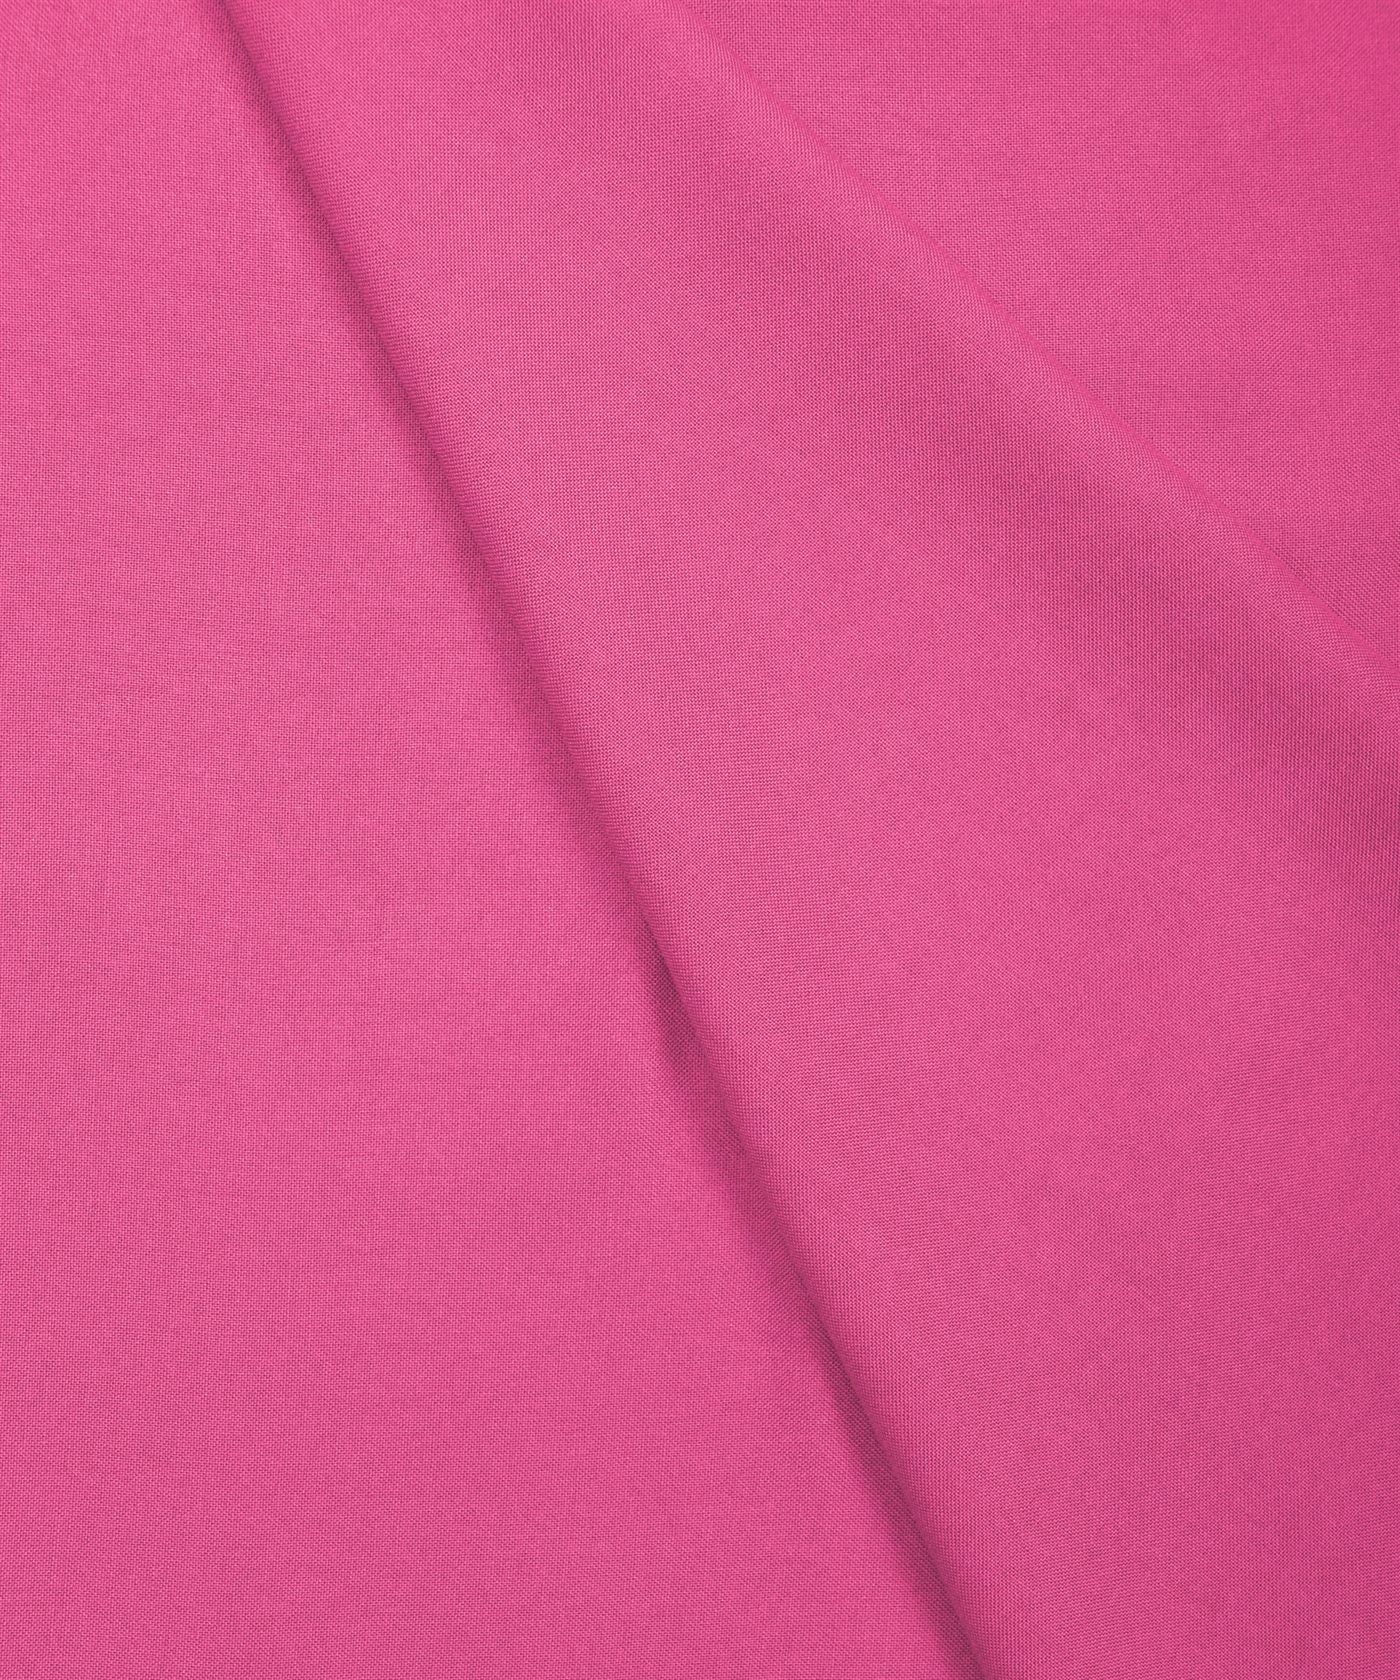 Dark Pink Plain Dyed Rayon Fabric